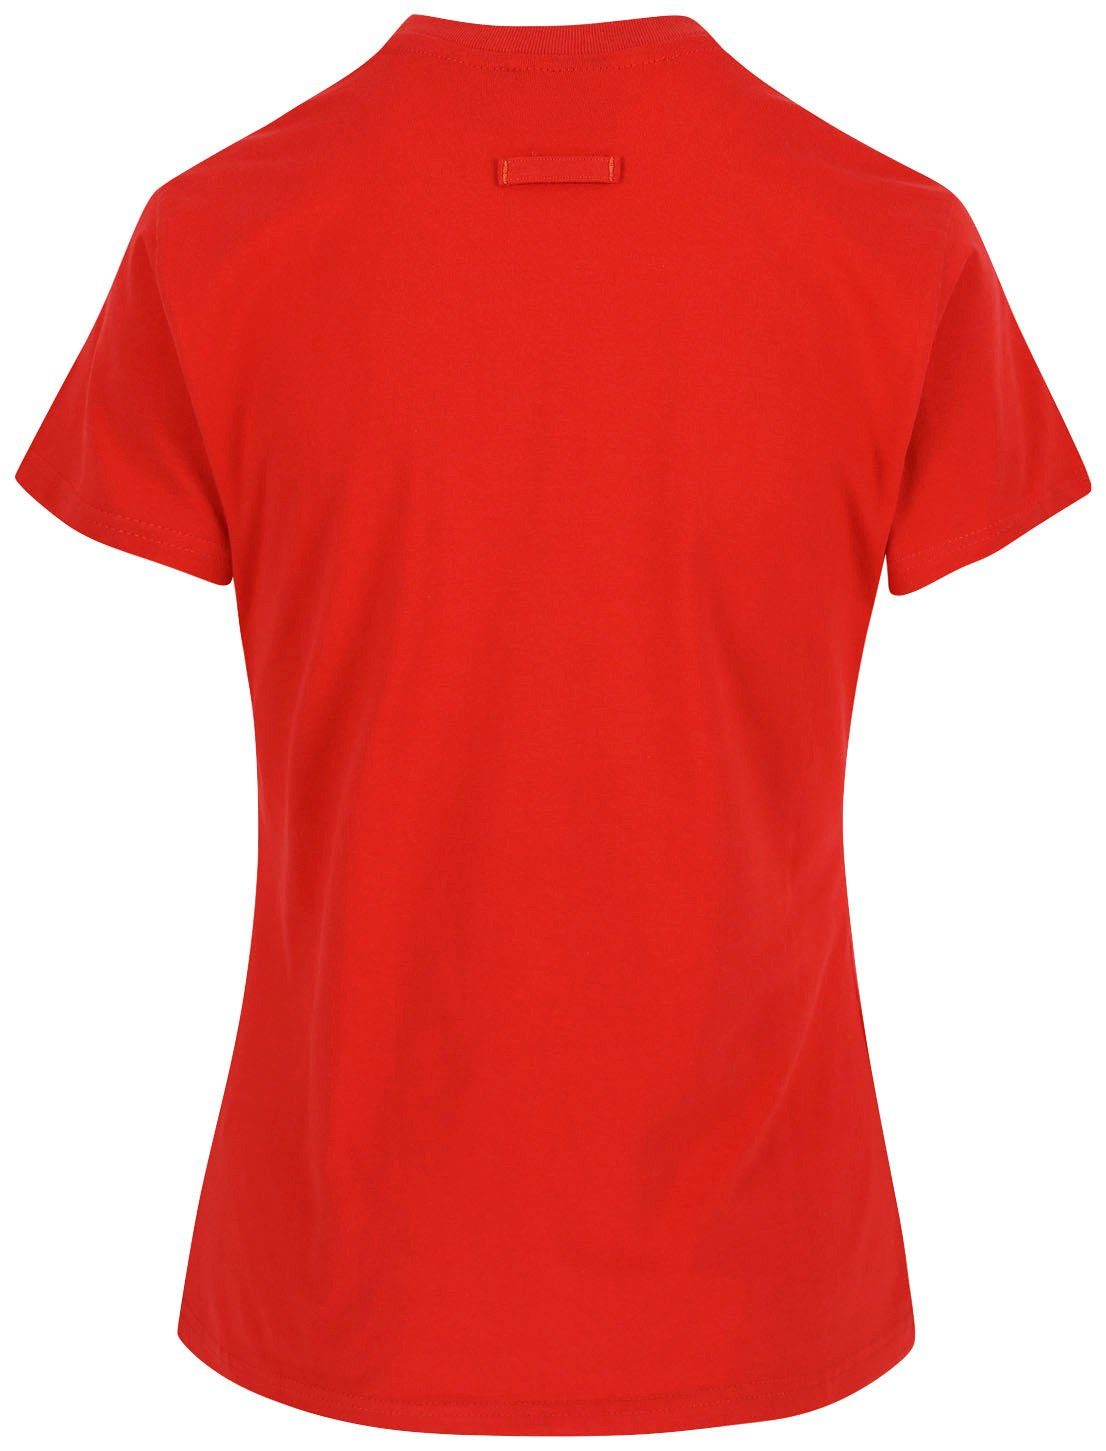 Tragegefühl T-Shirt rot angenehmes Figurbetont, 1 Schlaufe, hintere Damen T-Shirt Epona Kurzärmlig Herock